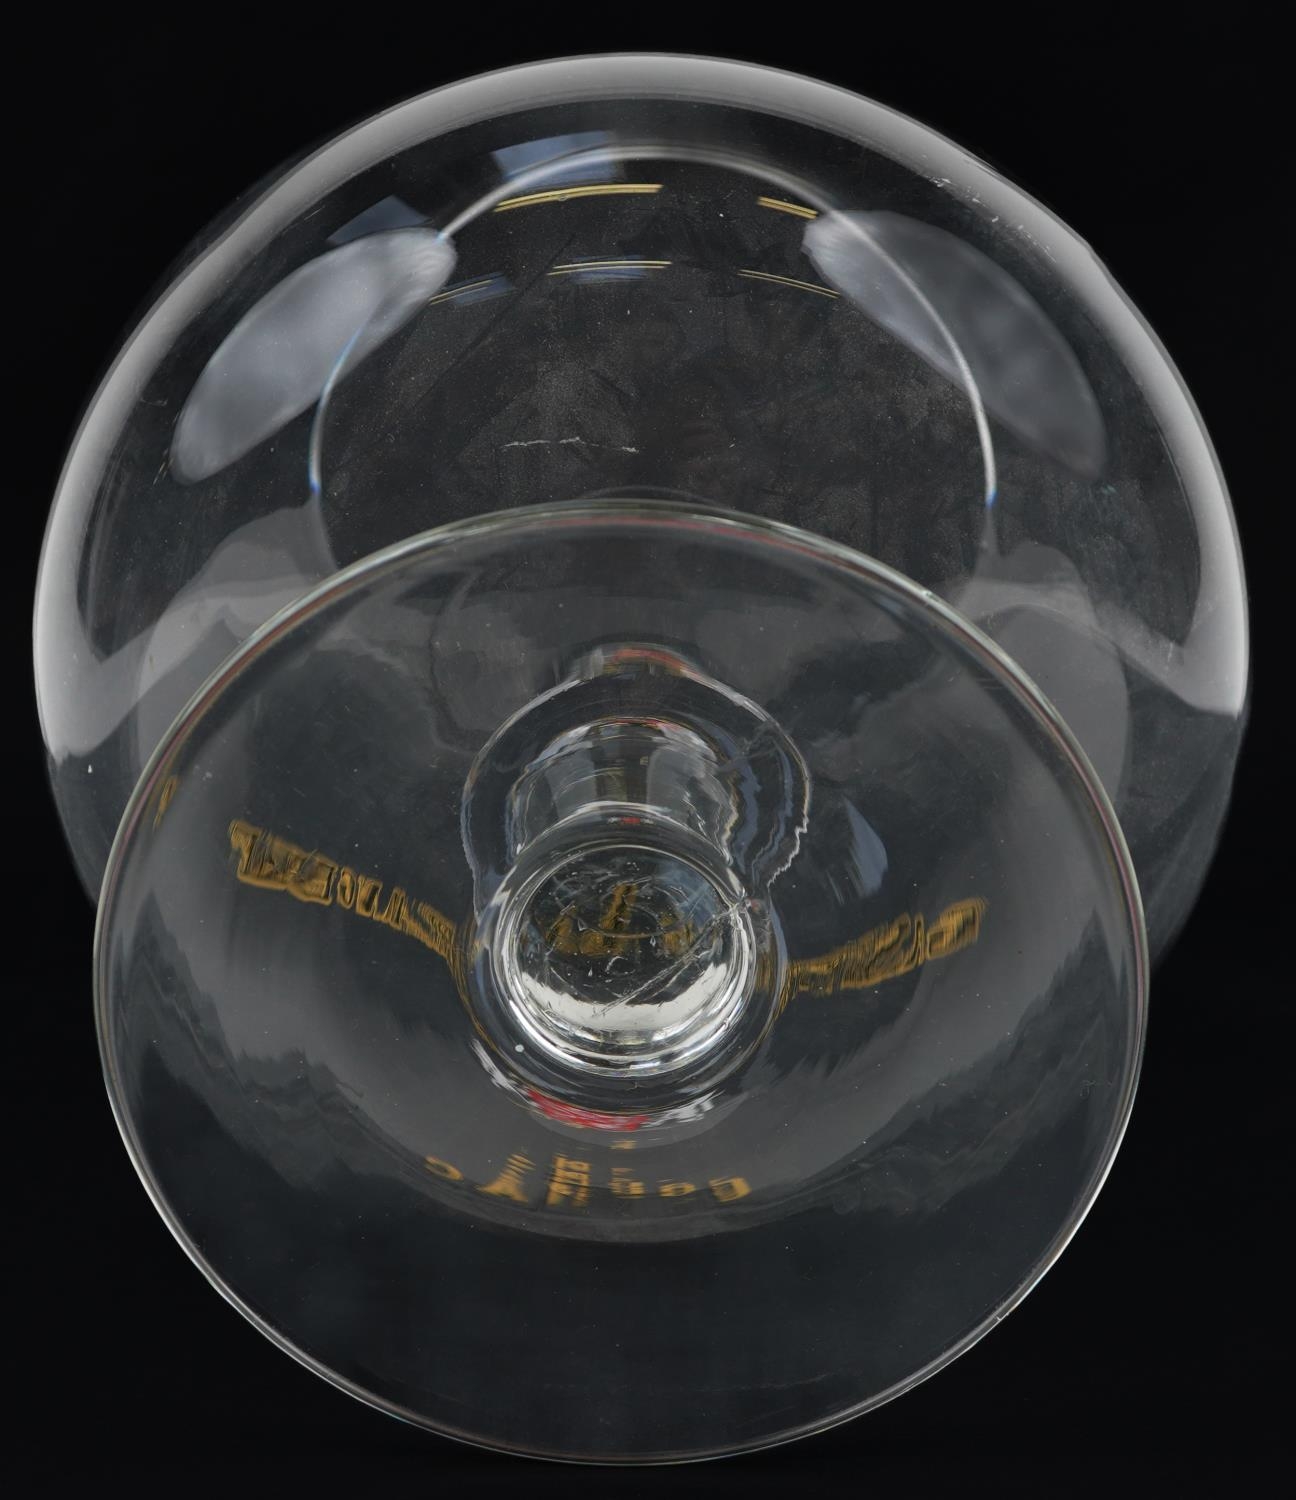 19th/early 20th century oversized cognac glass advertising Gaston de la Grange Cognac, 30cm high - Image 3 of 3